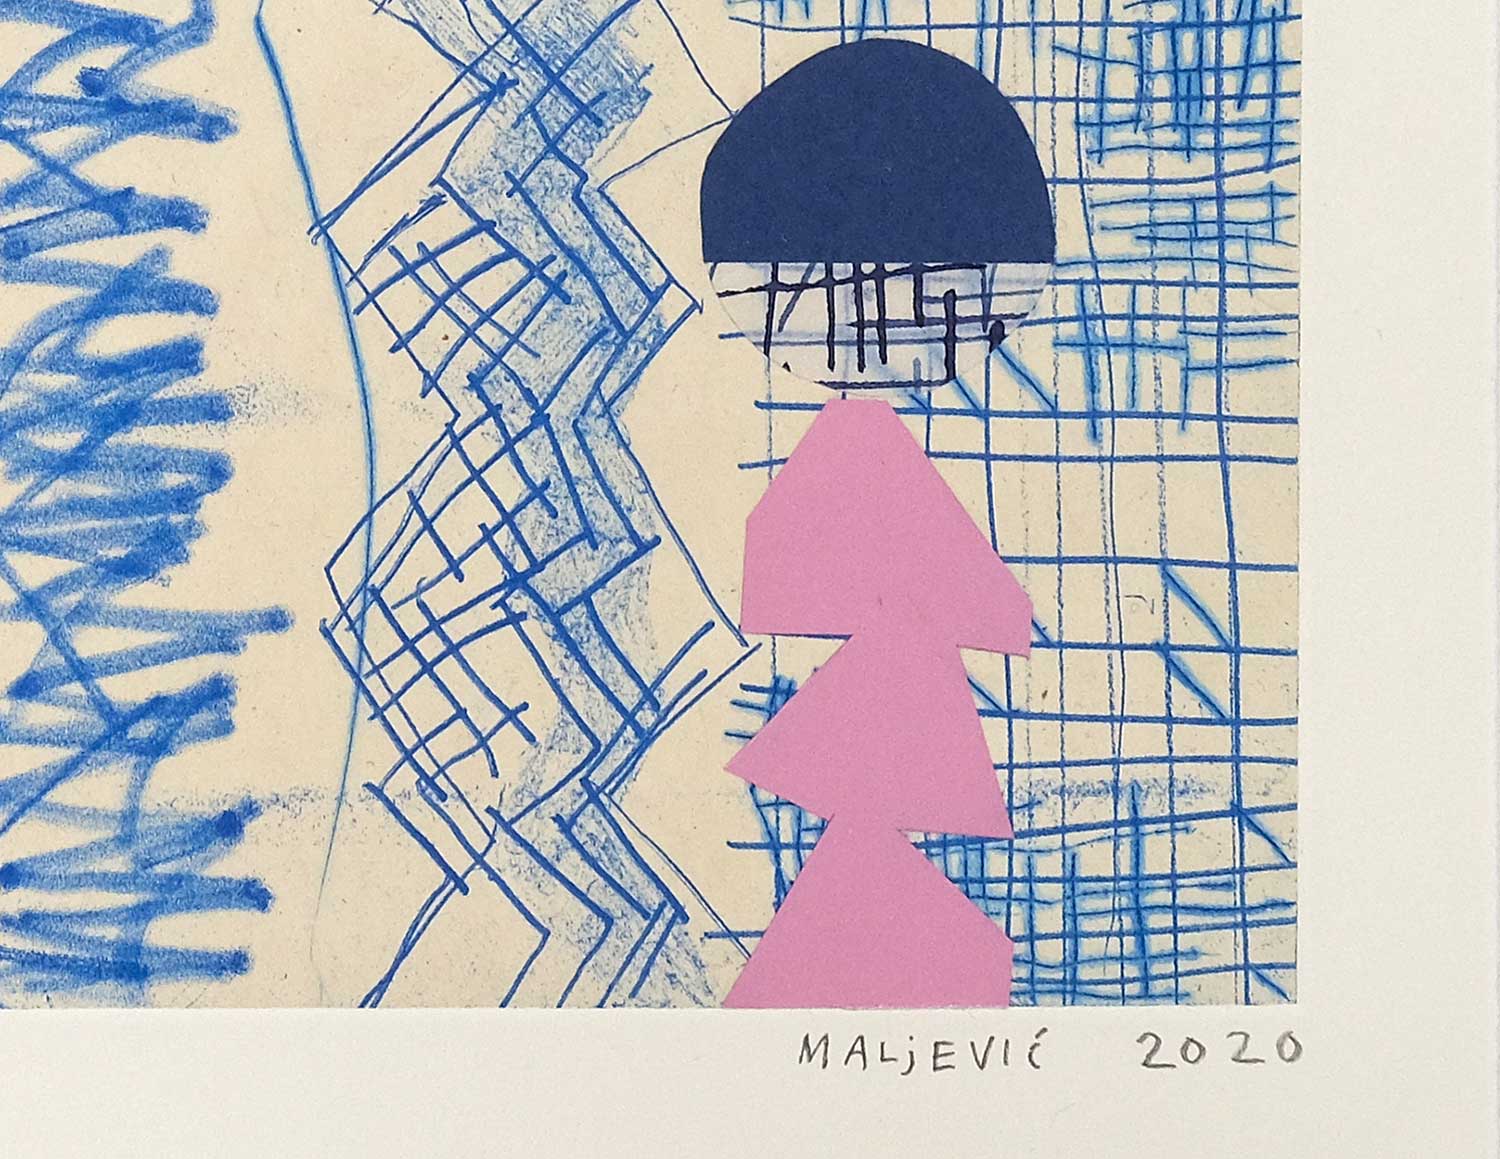 Maja Maljević, detail of "Wiggly Squiggly", 2020